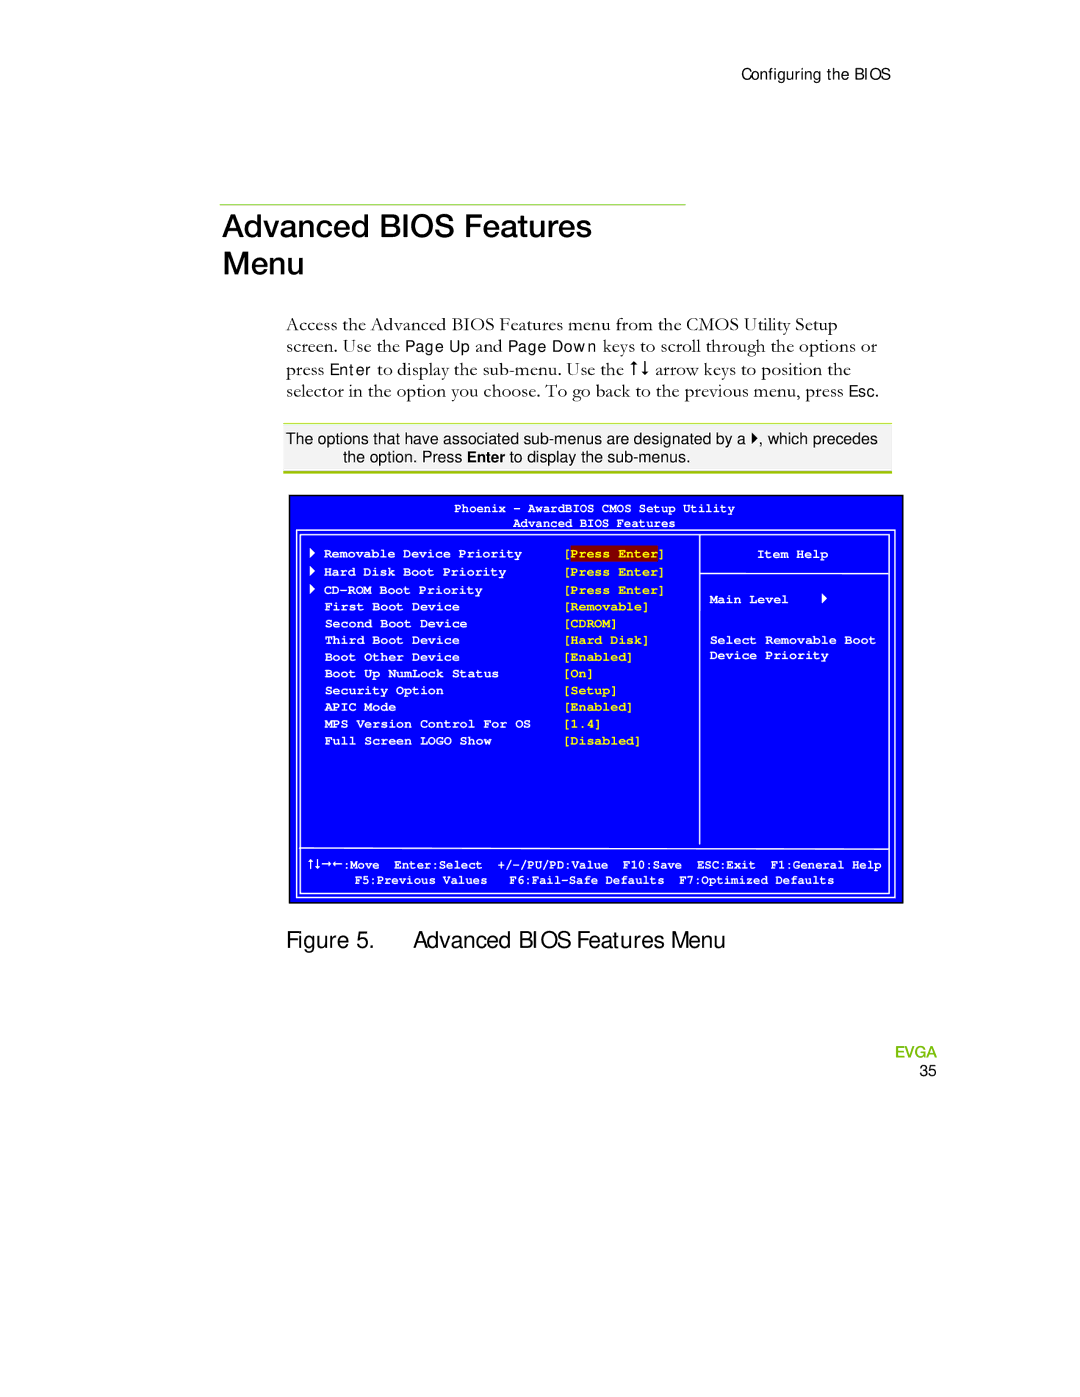 EVGA 730I manual Advanced Bios Features Menu, Cdrom 